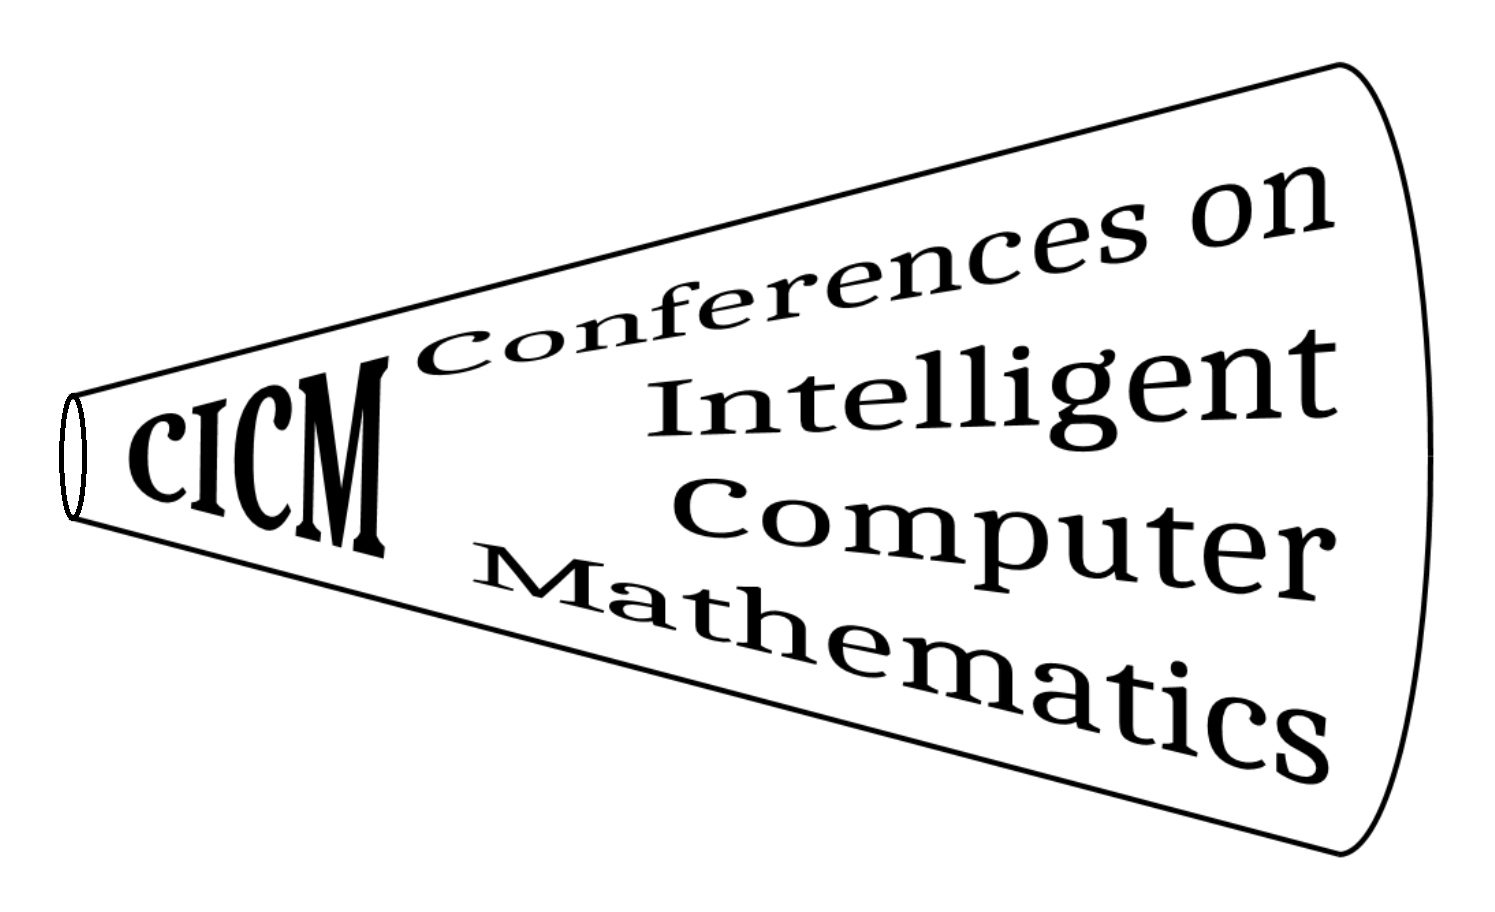 cicm logo